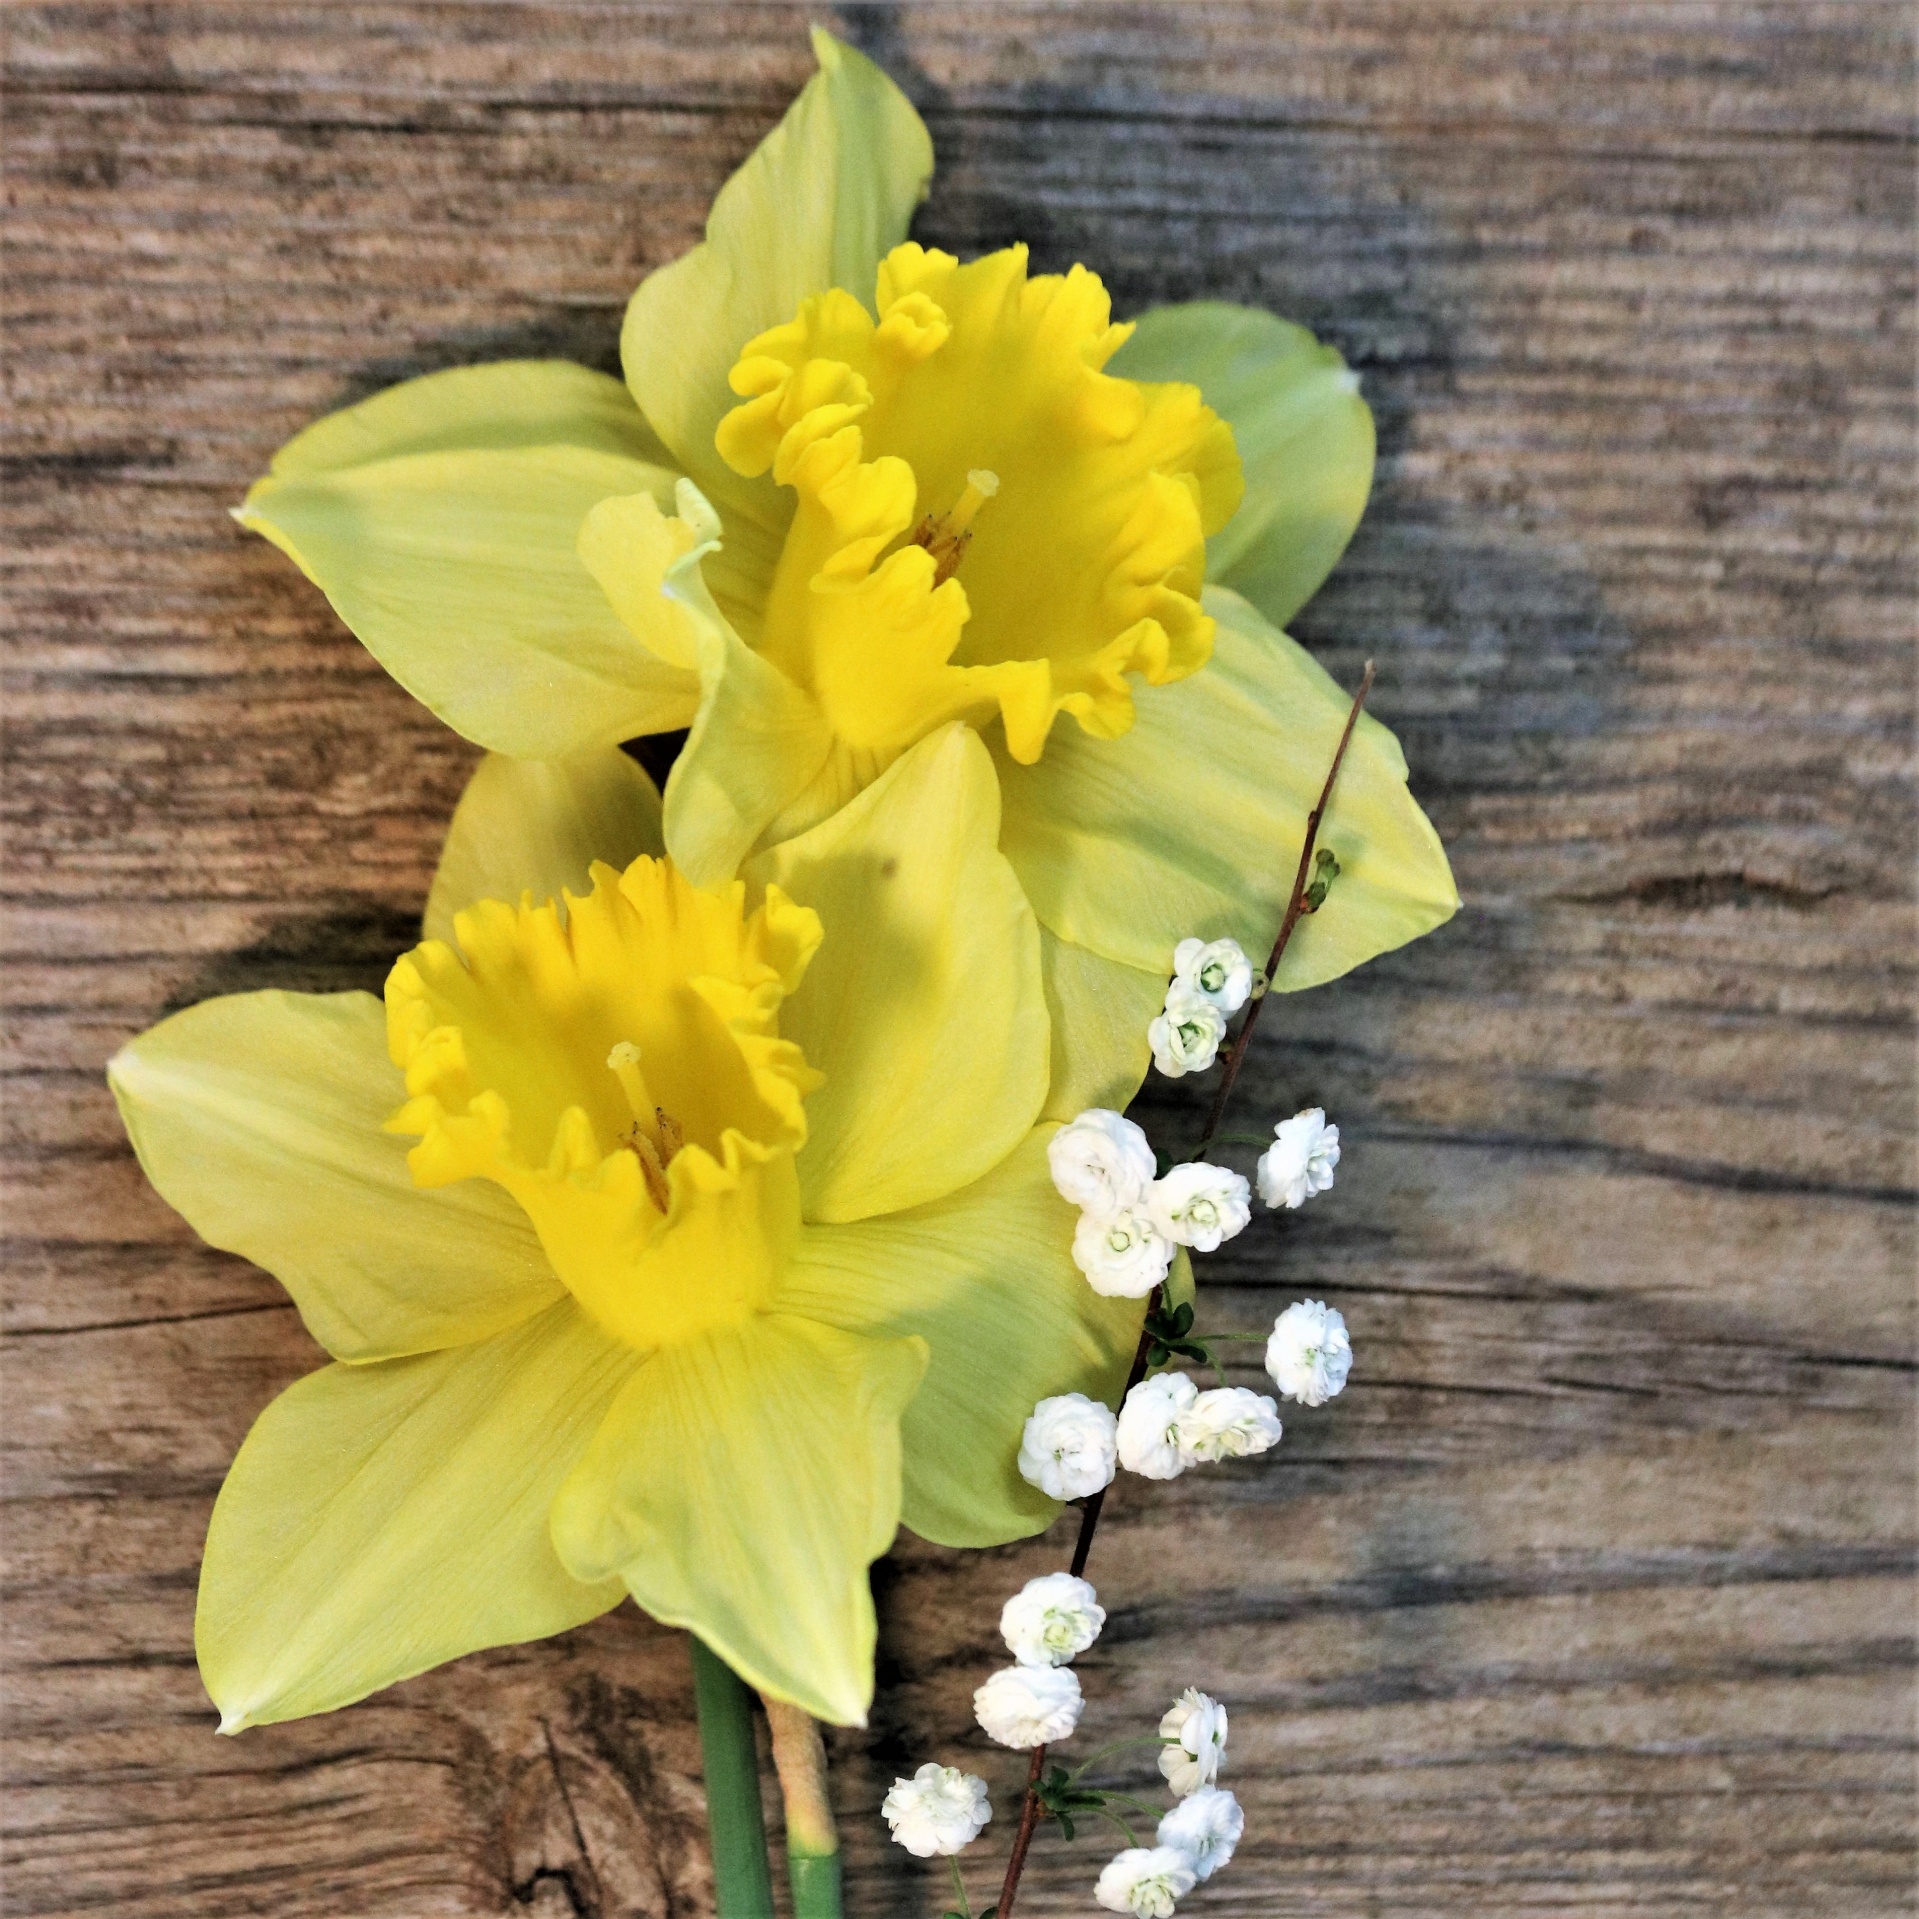 Two Daffodils On Wood